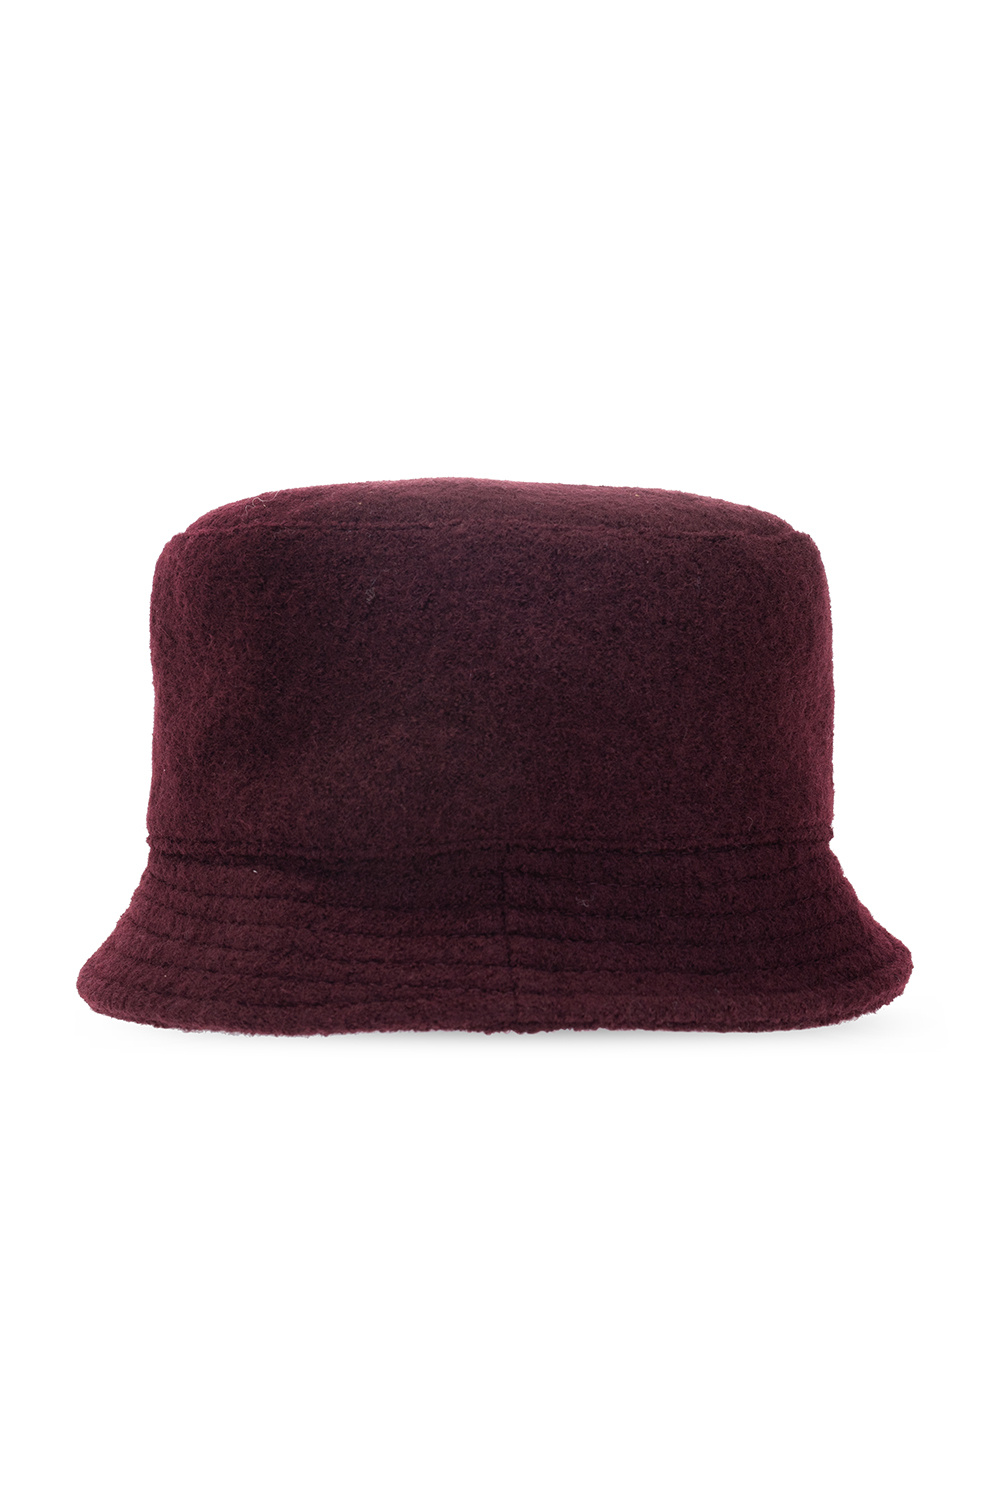 Burgundy Wool 5 Panel Hat